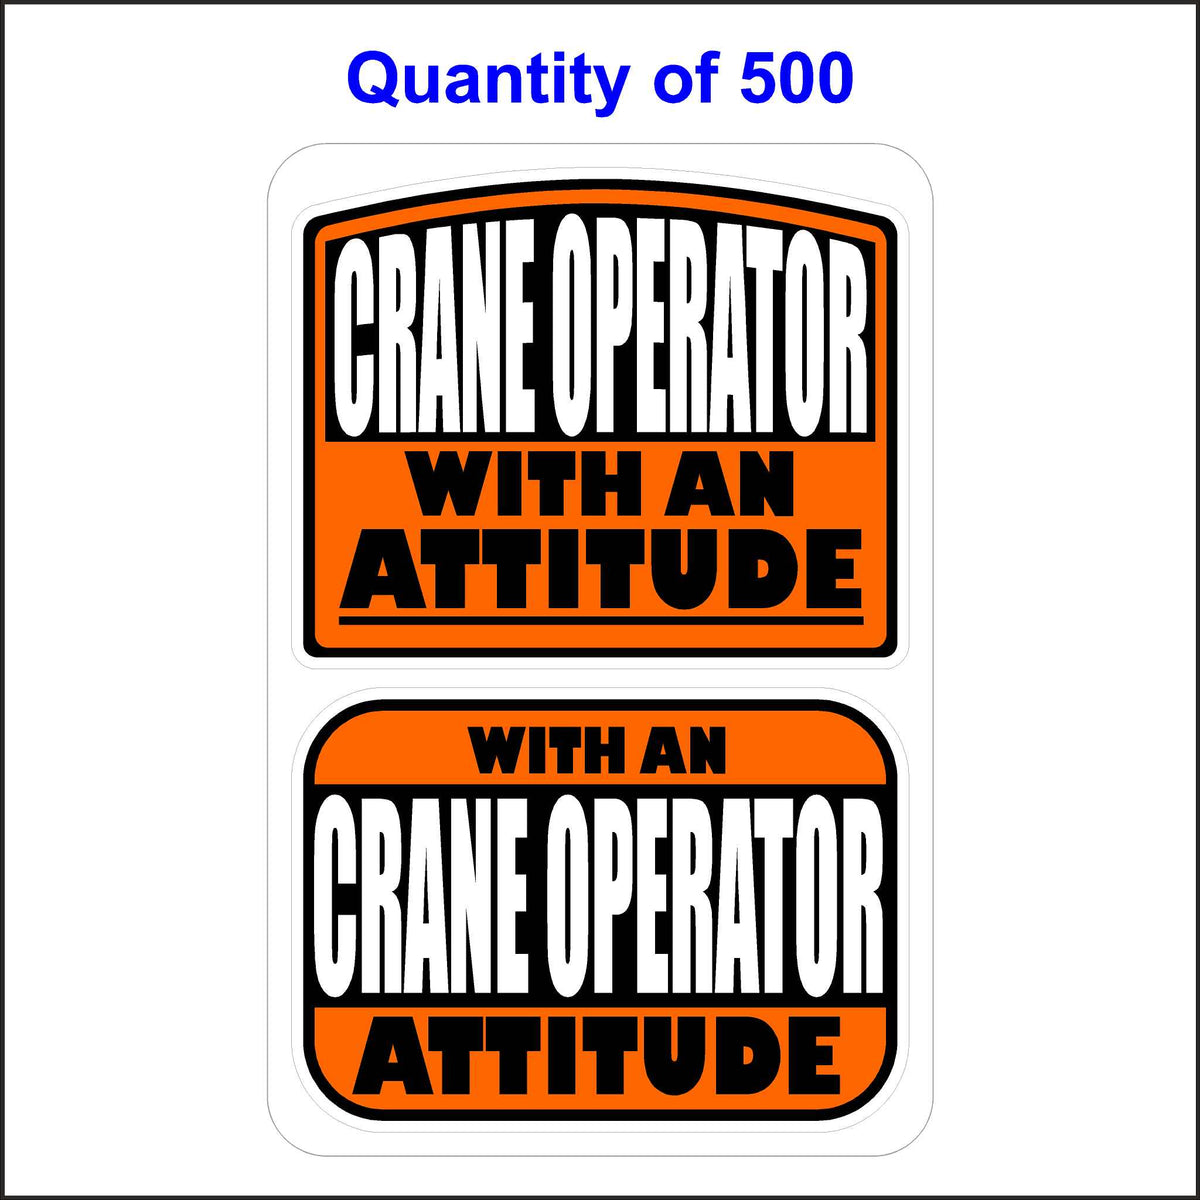 Crane Operator With An Attitude Stickers 500 Quantity.